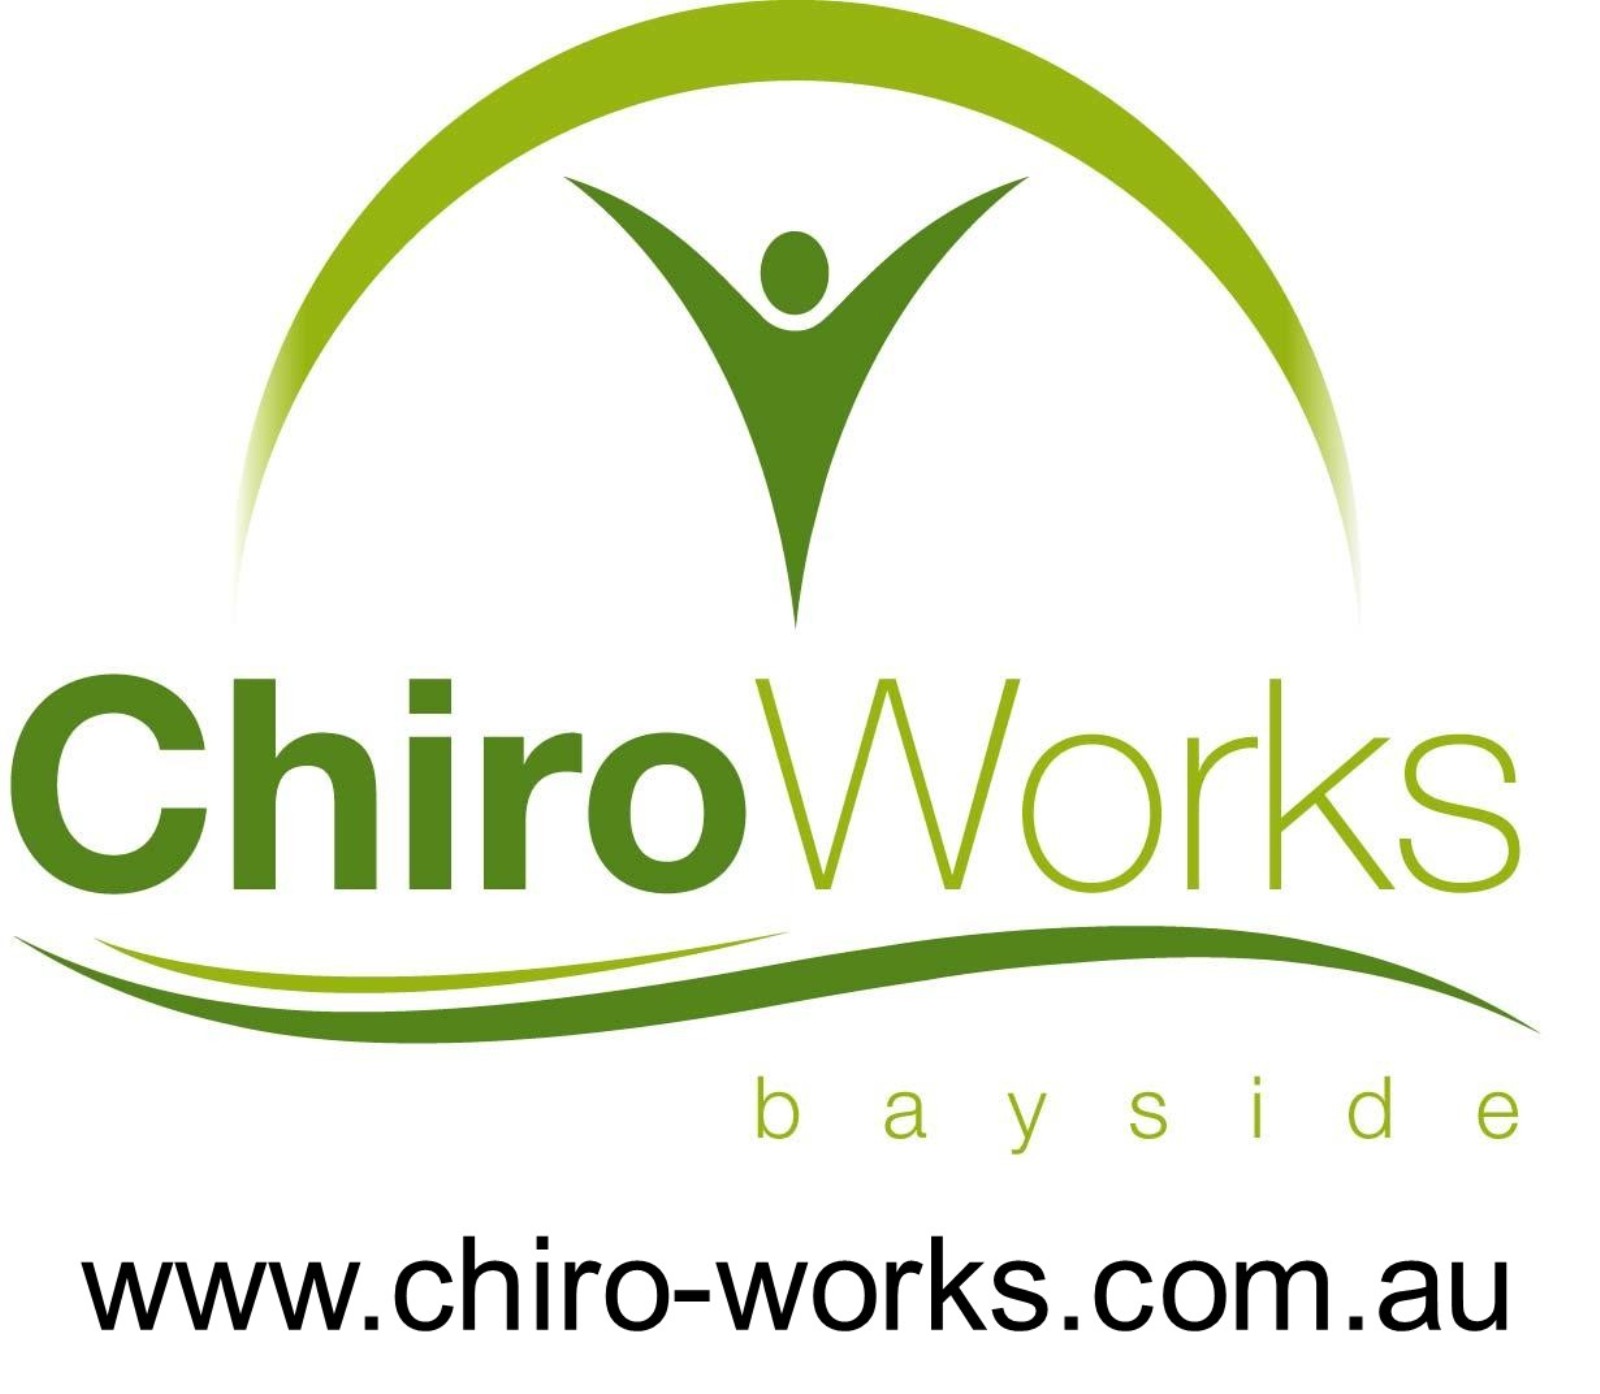 ChiroWorks Bayside